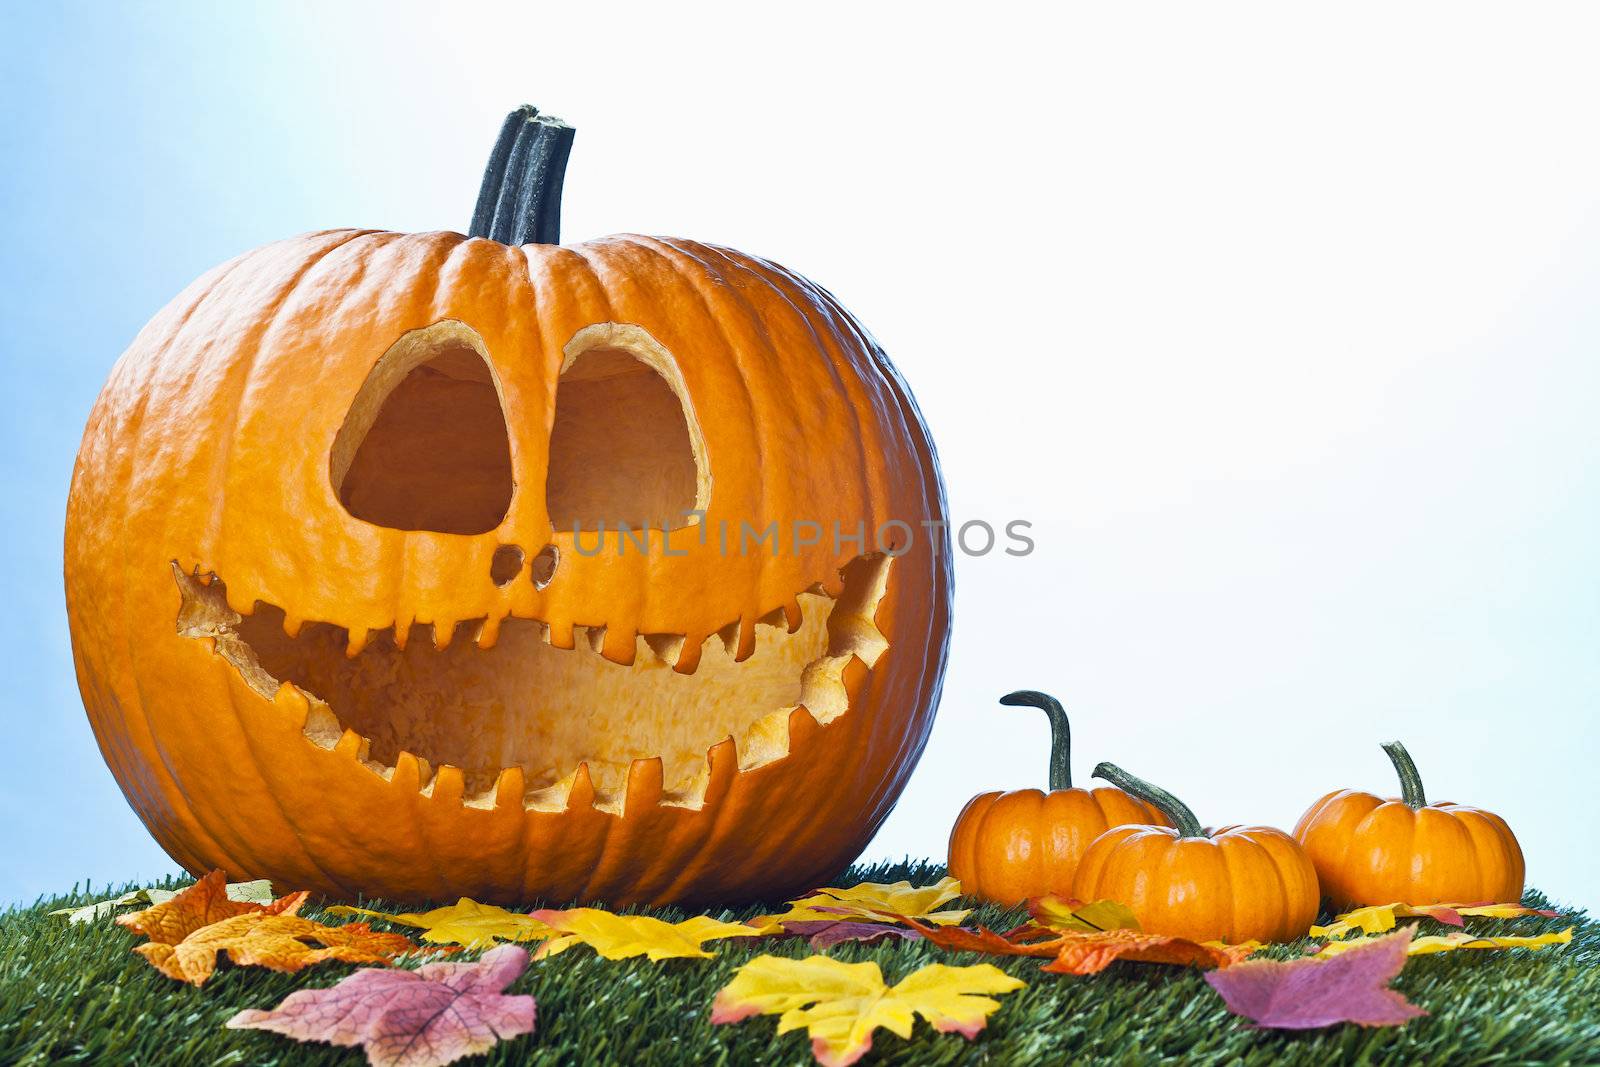 Mini pumpkins, Jack O Lantern and orange autumn leaves arranged on a grass for halloween decoration.